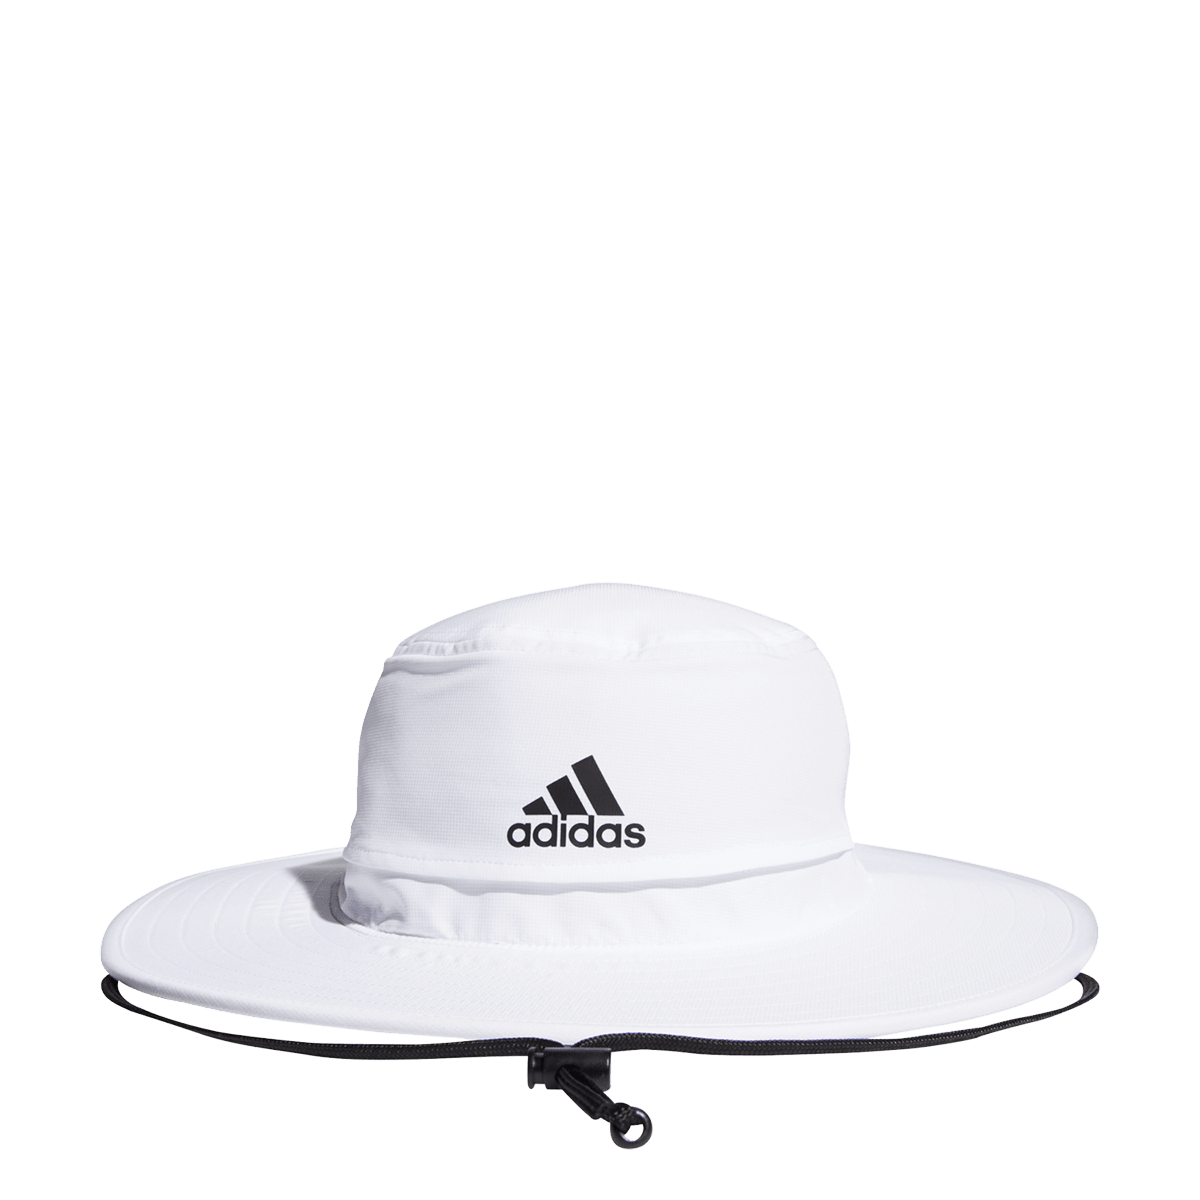 adidas golf bucket hat